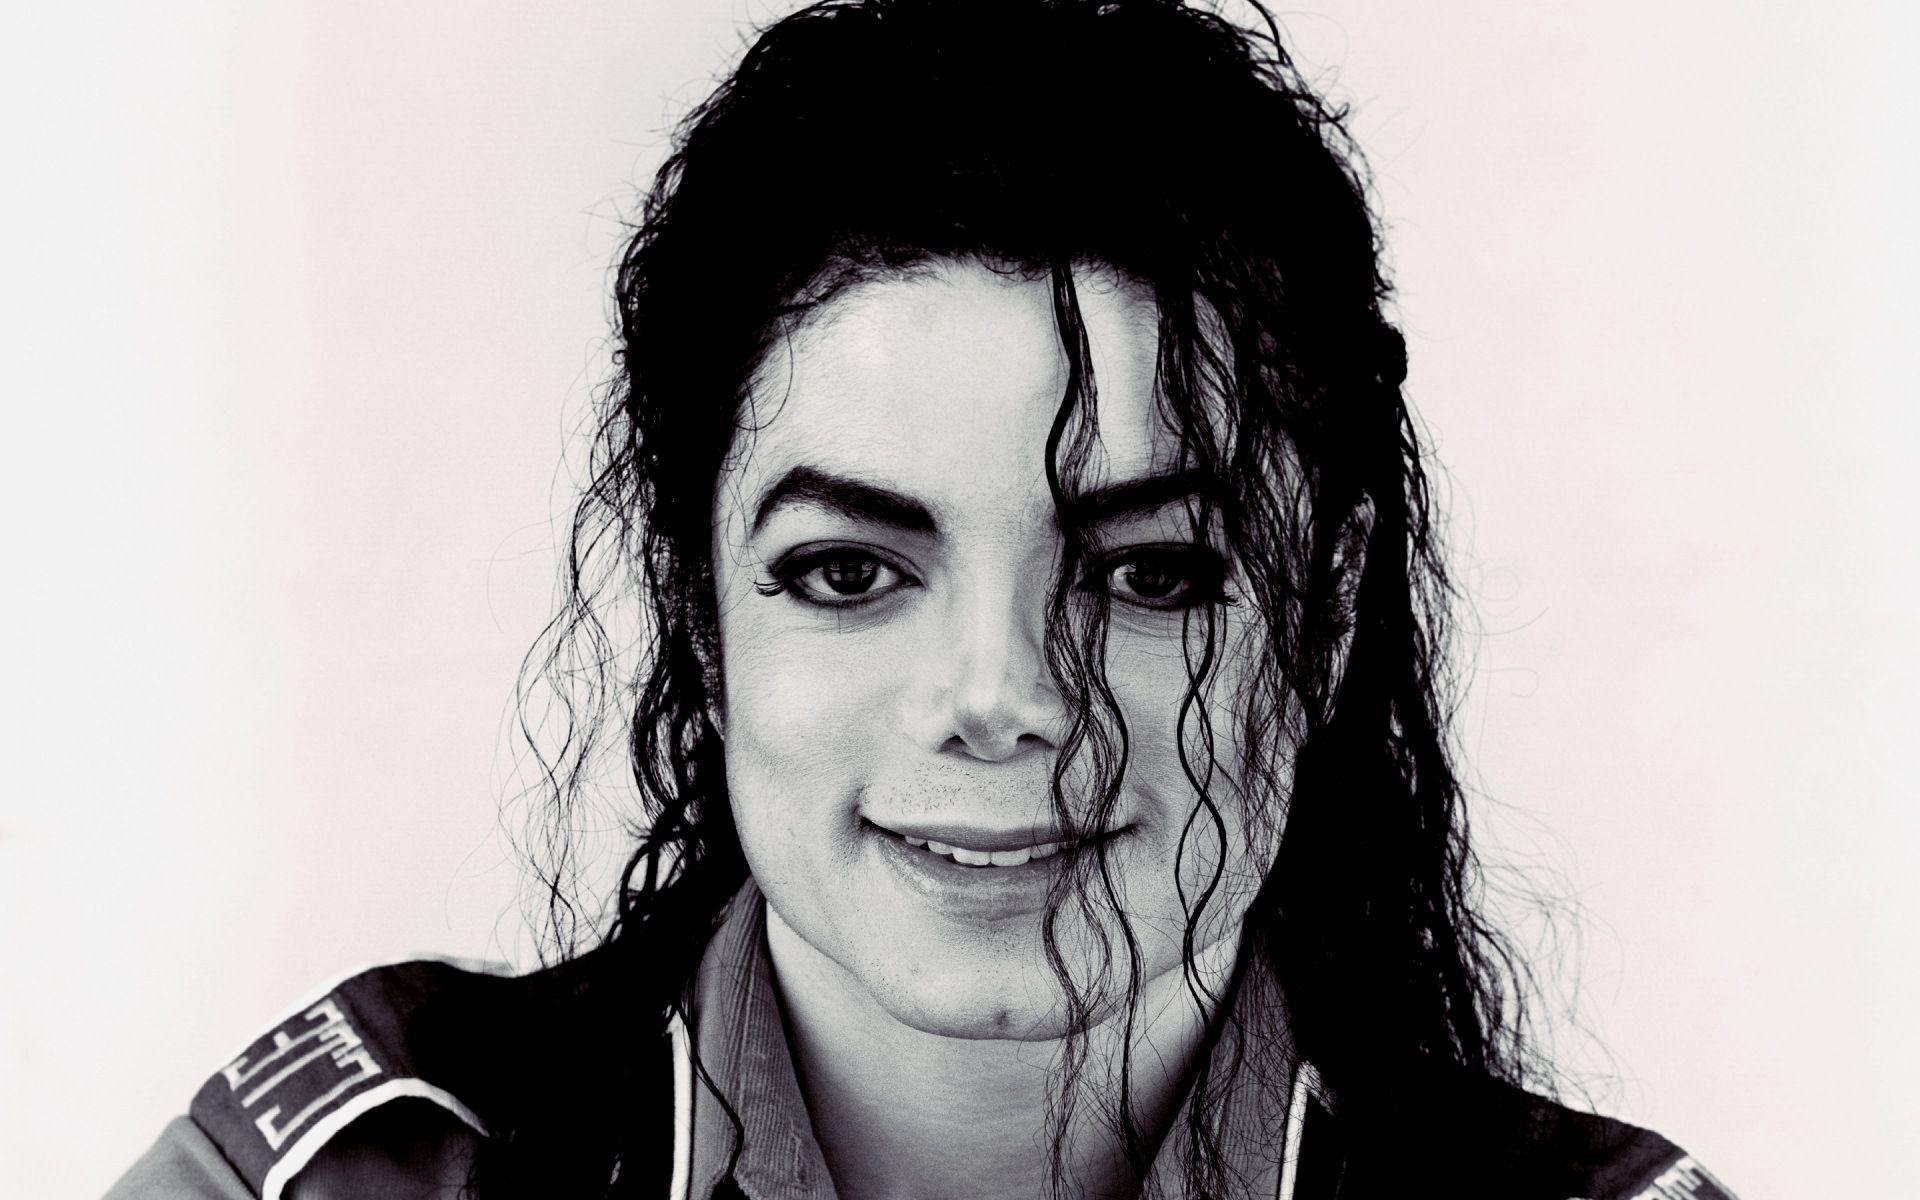 Michael Jackson Wallpaper HD Background, Image, Pics, Photo Free